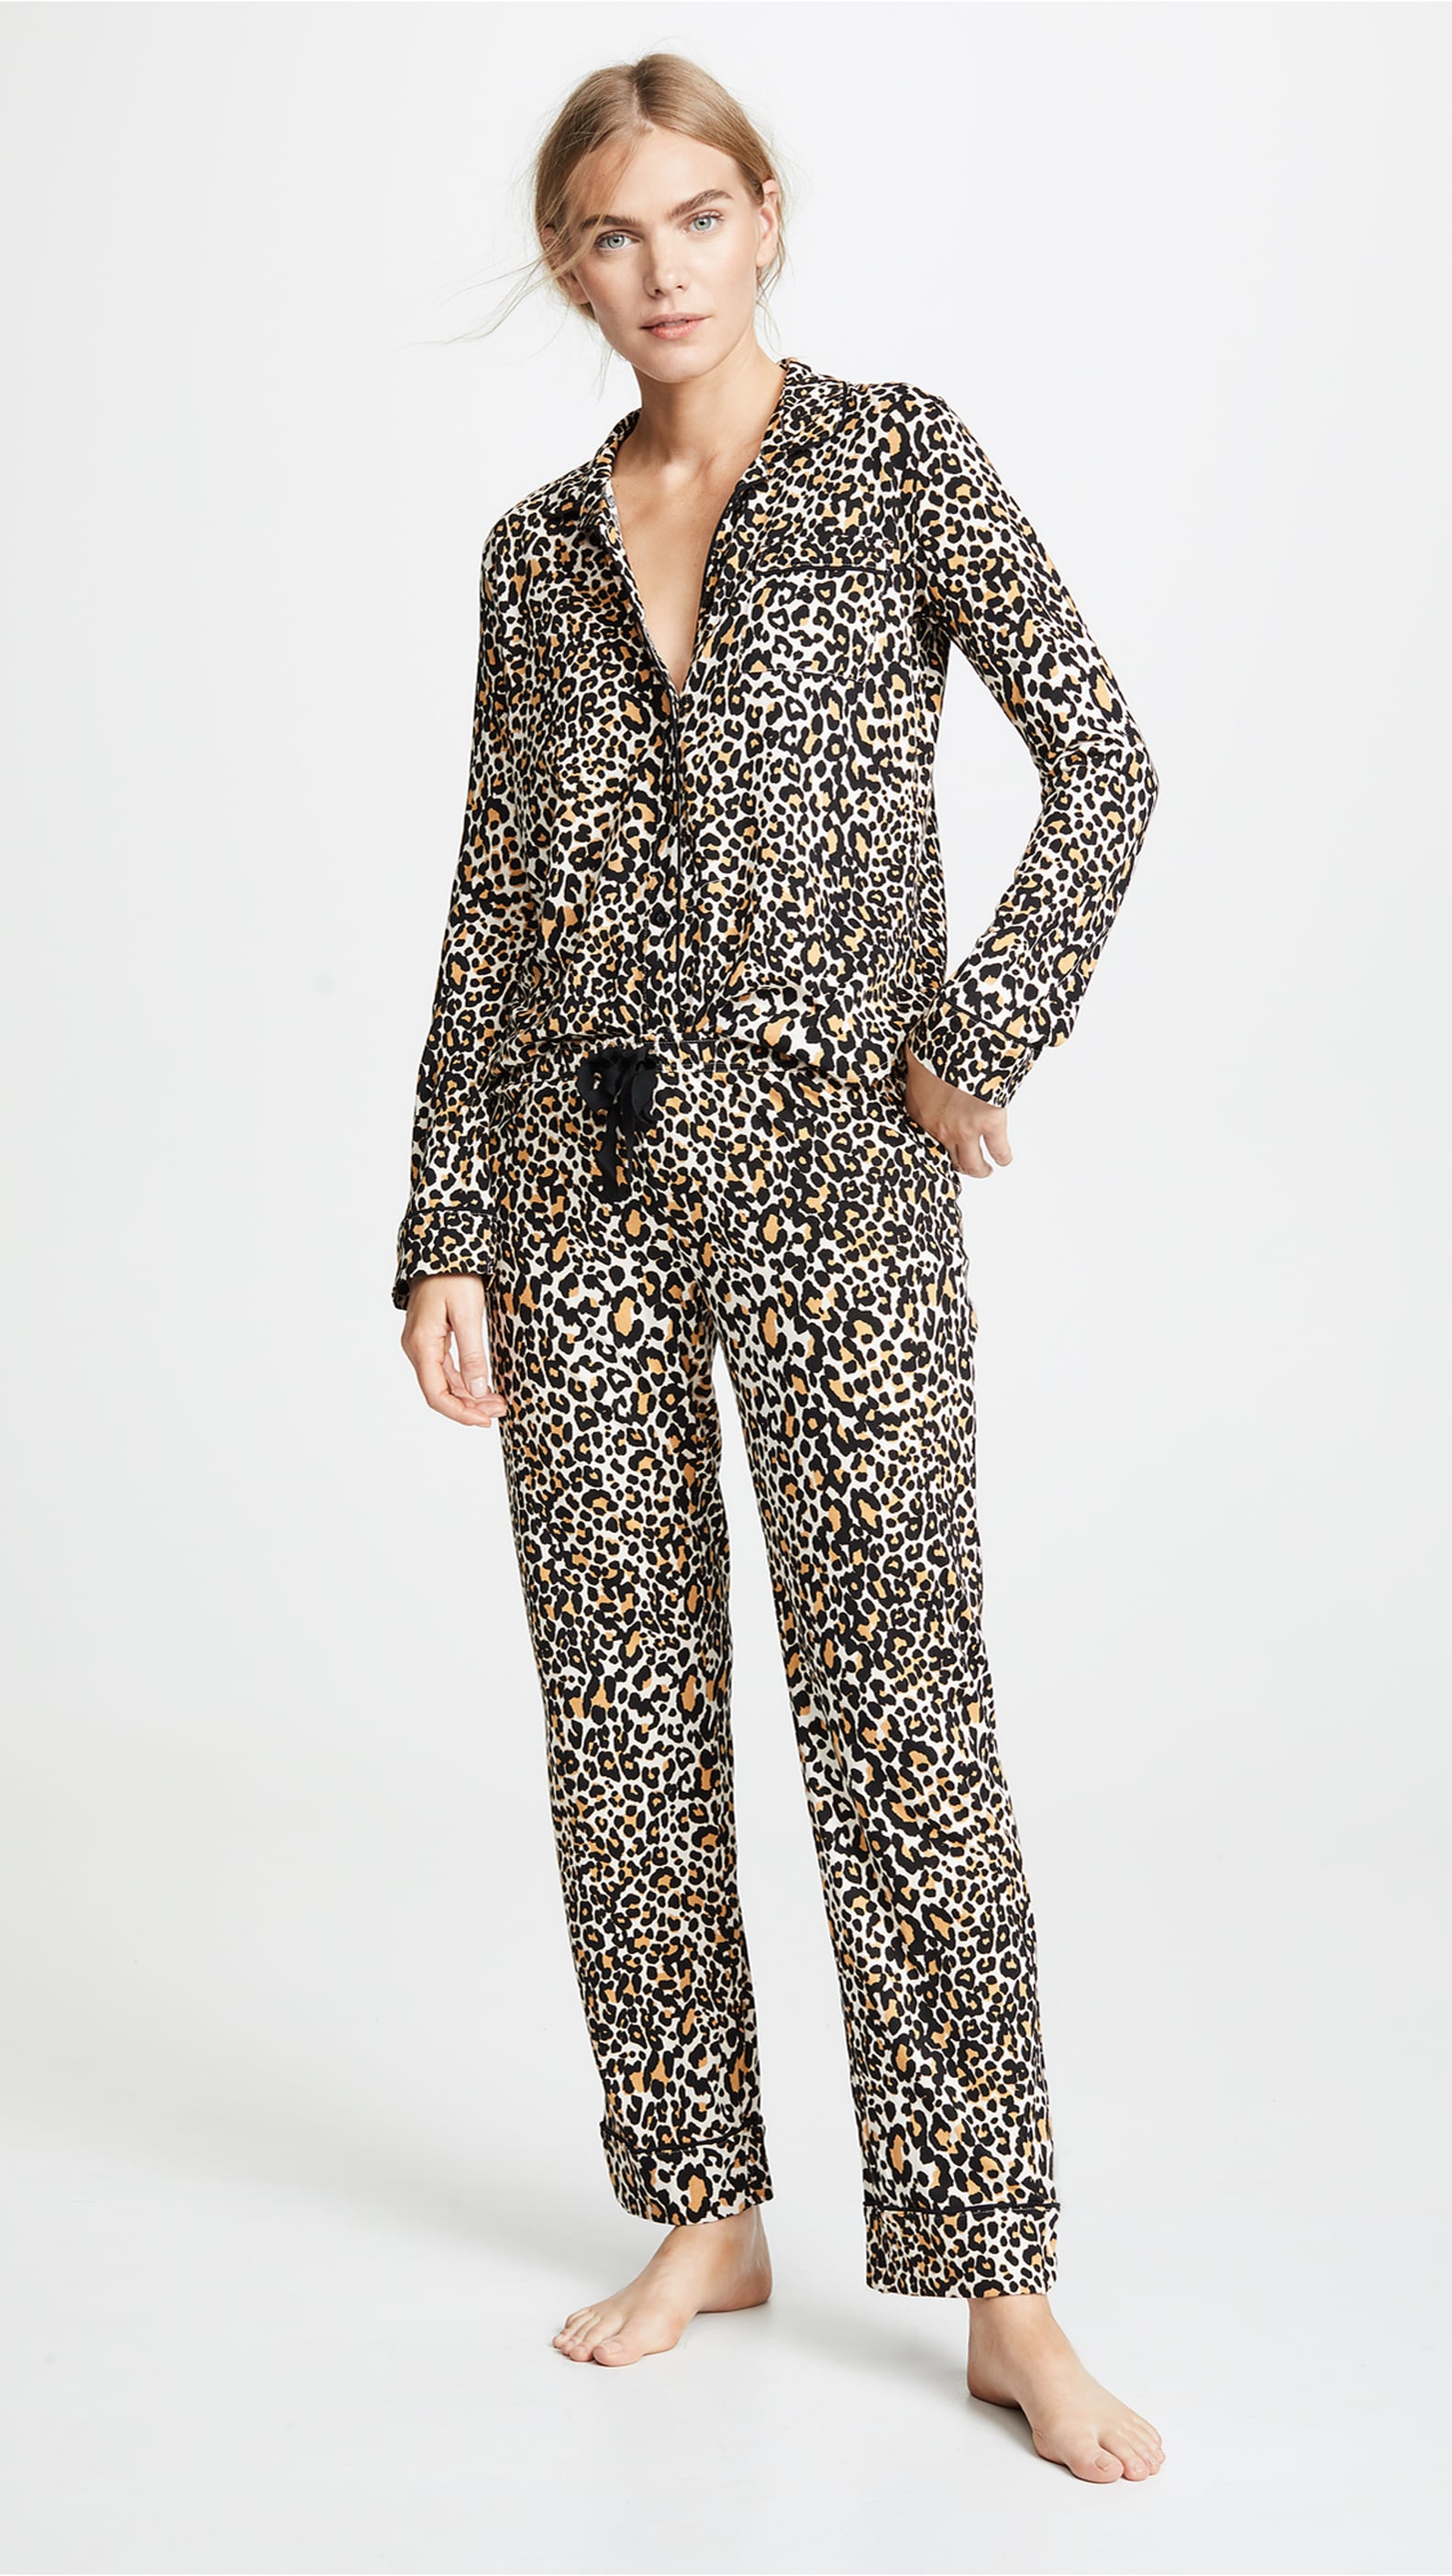 Best Pajamas For Women 2019 | POPSUGAR Fashion